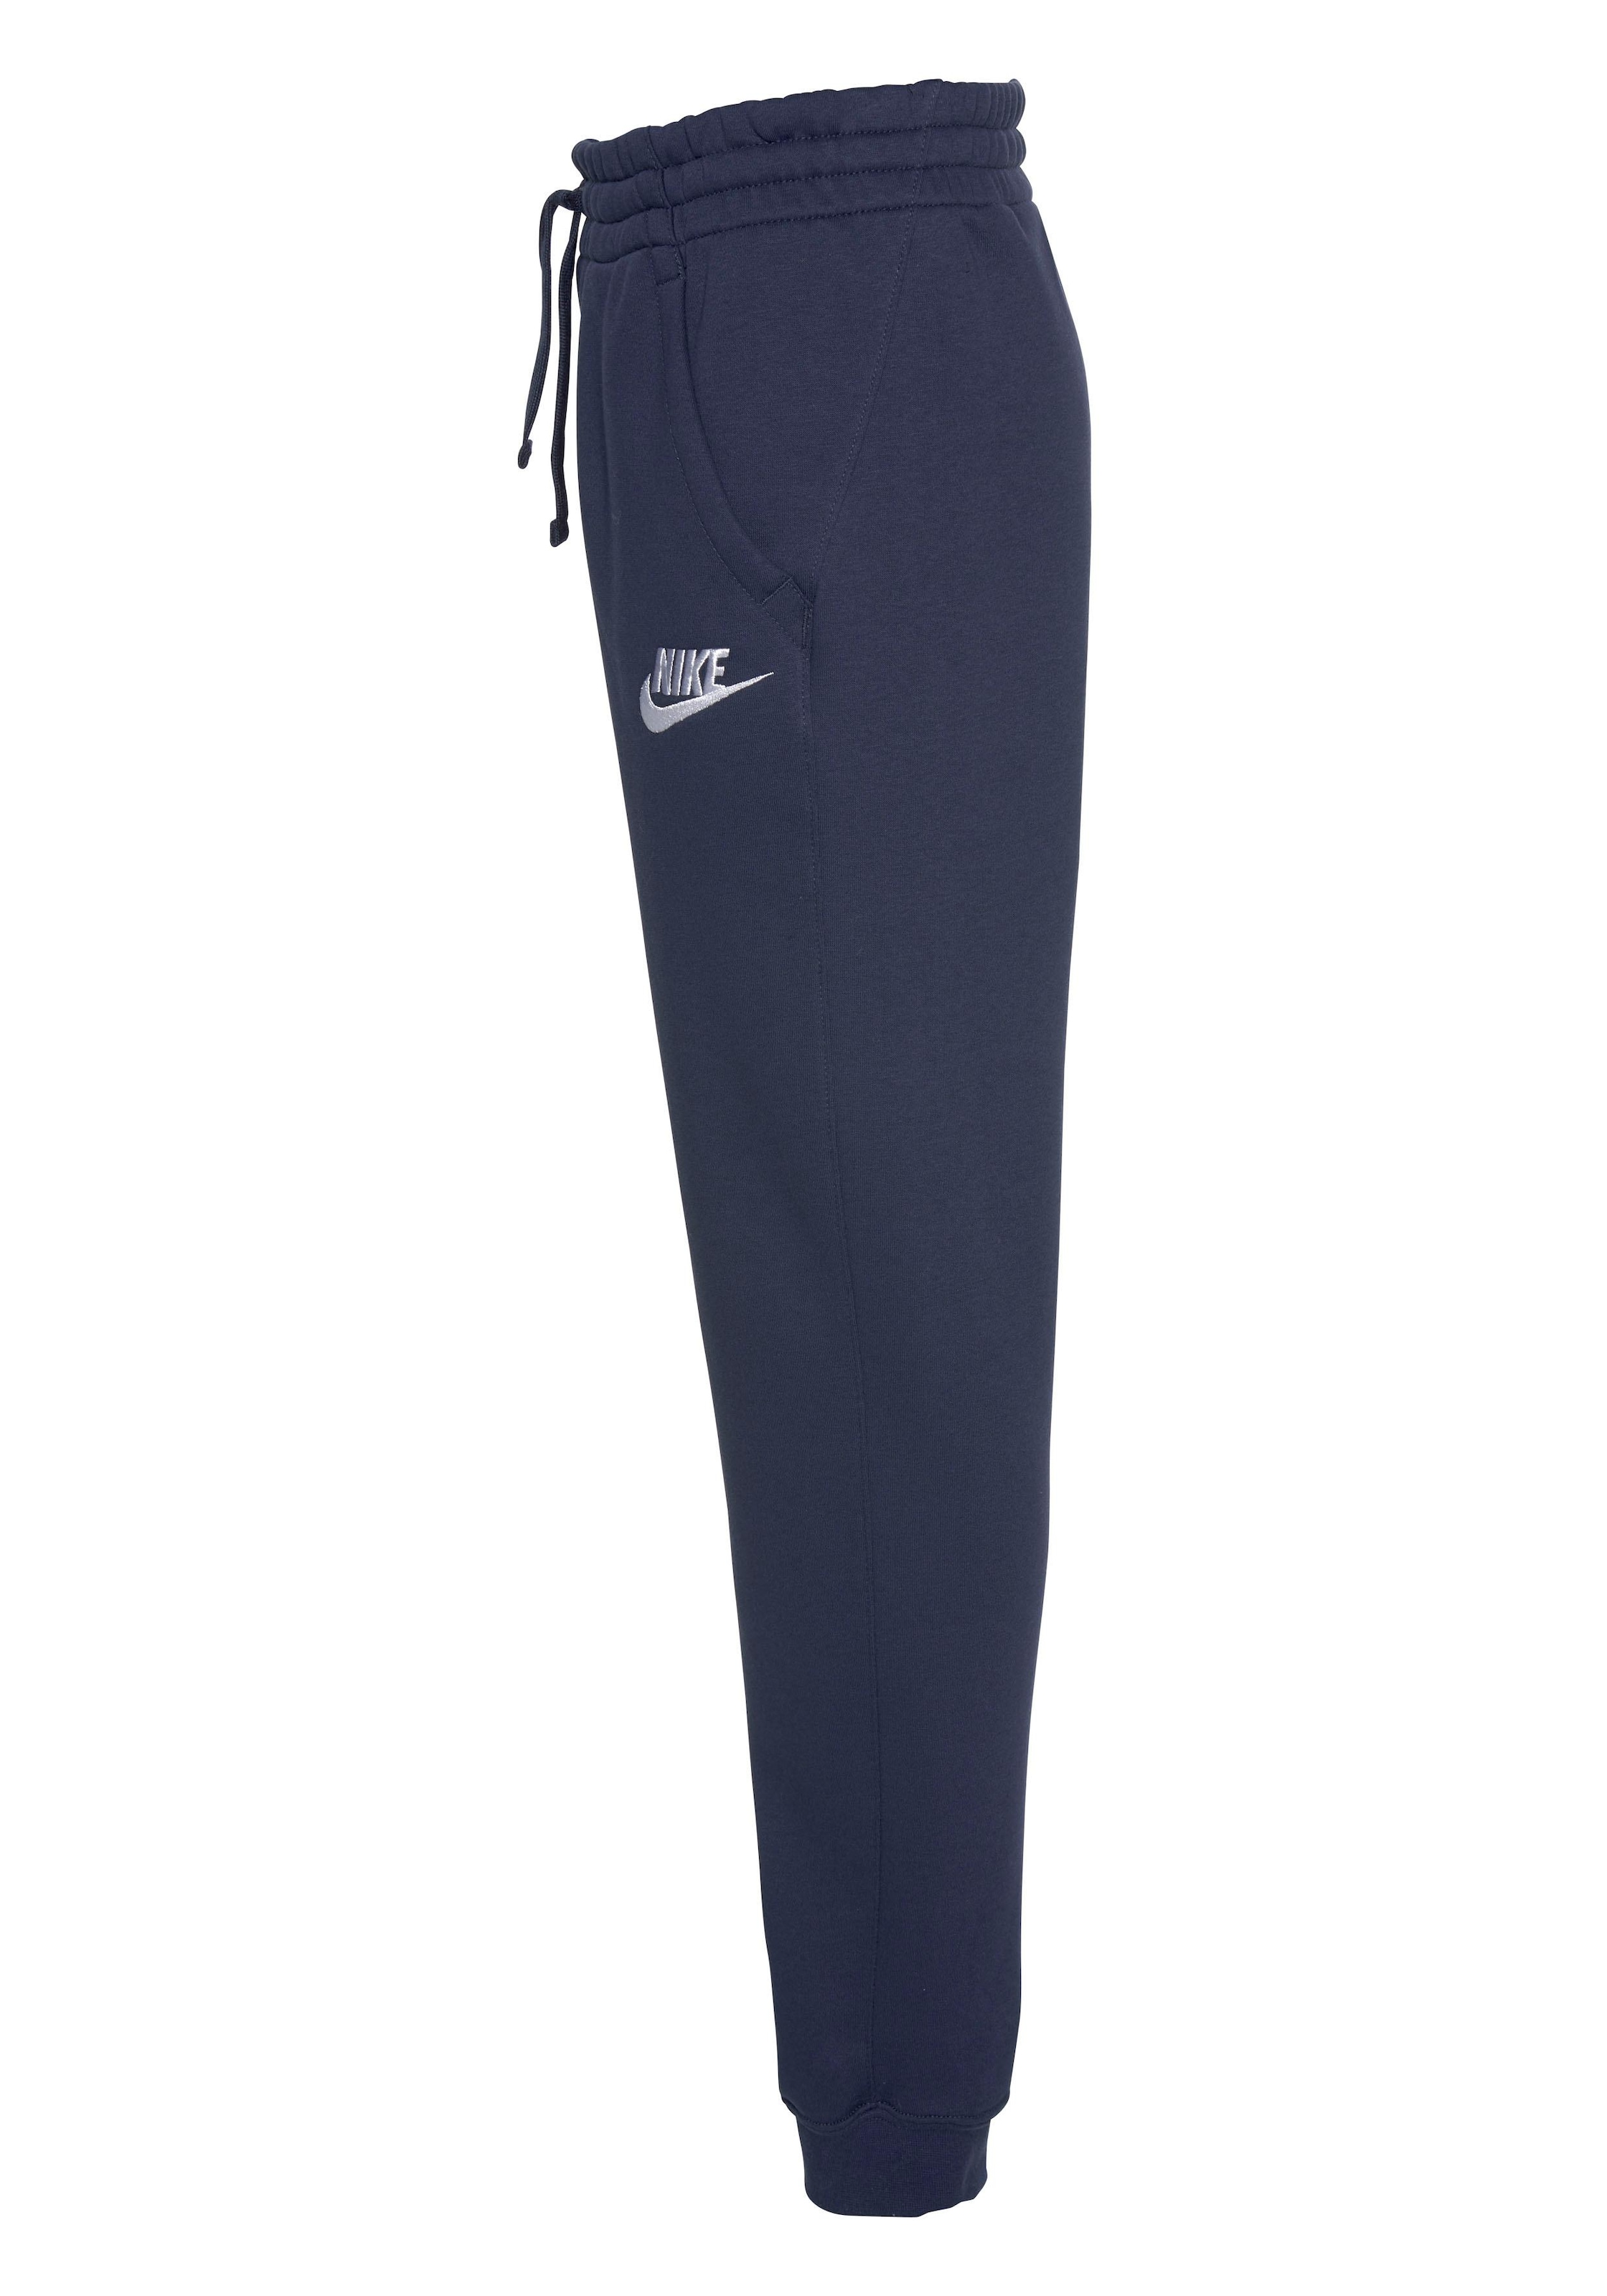 »B JOGGER Jogginghose Nike PANT« BAUR | NSW FLEECE CLUB Sportswear